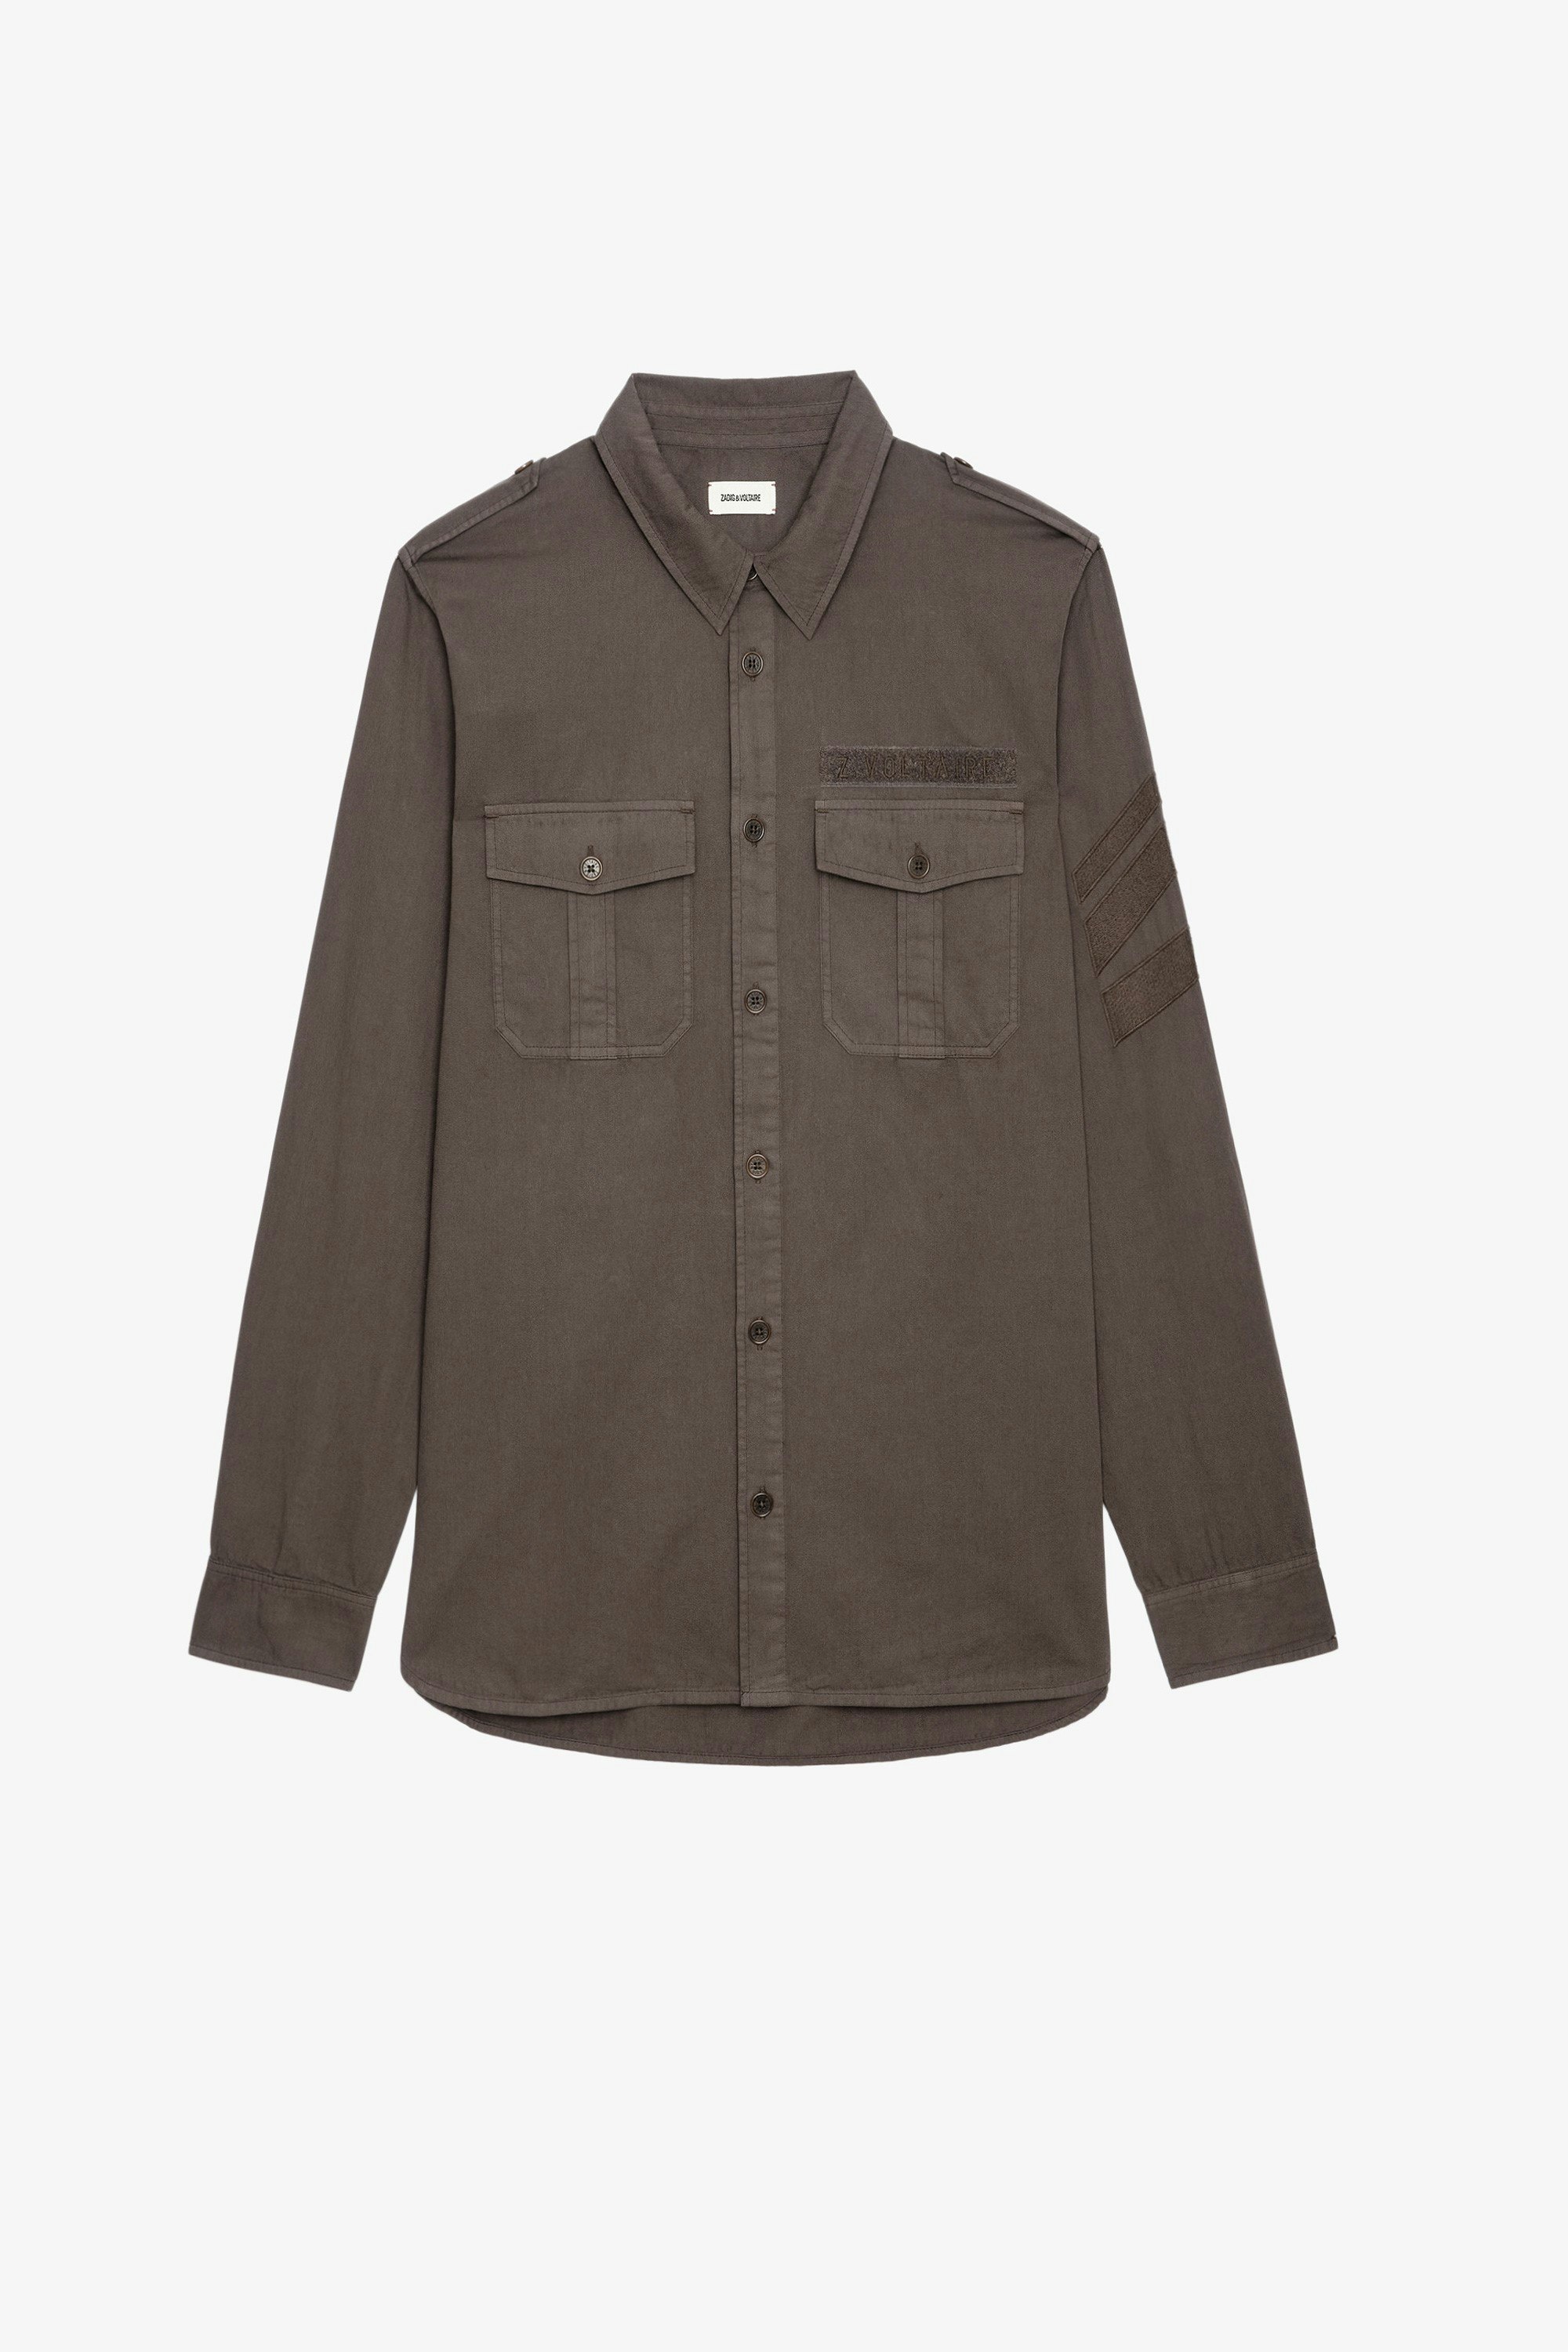 Serge Shirt Men's bronze cotton twill military shirt 